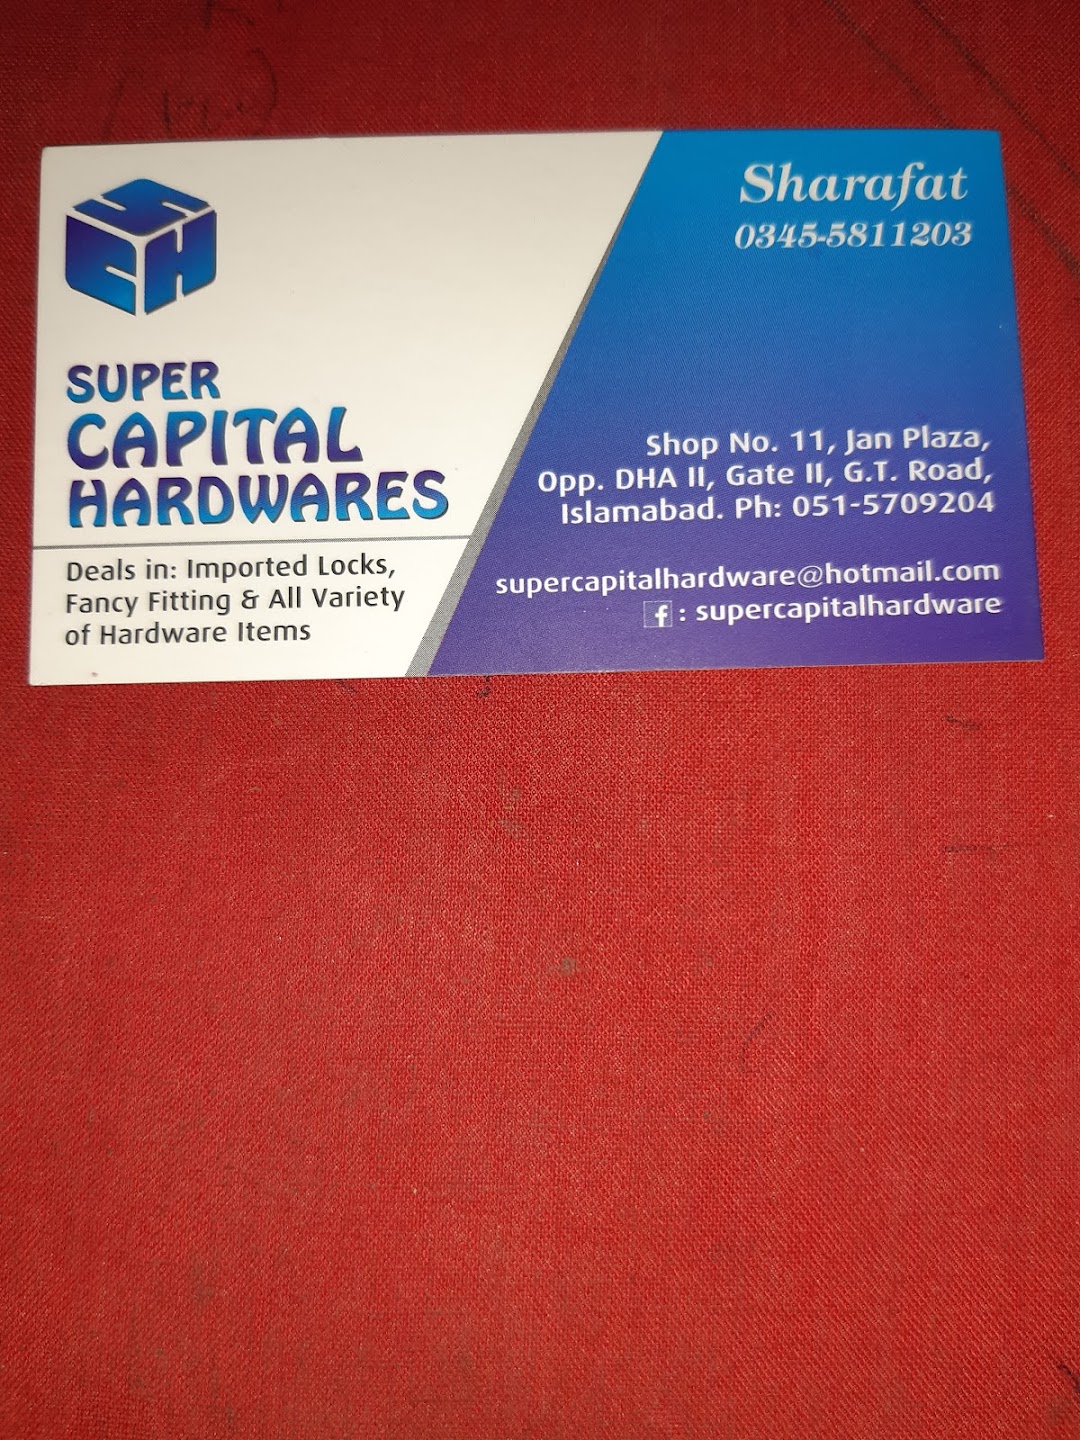 Super Capital Hardware DHA phase 2